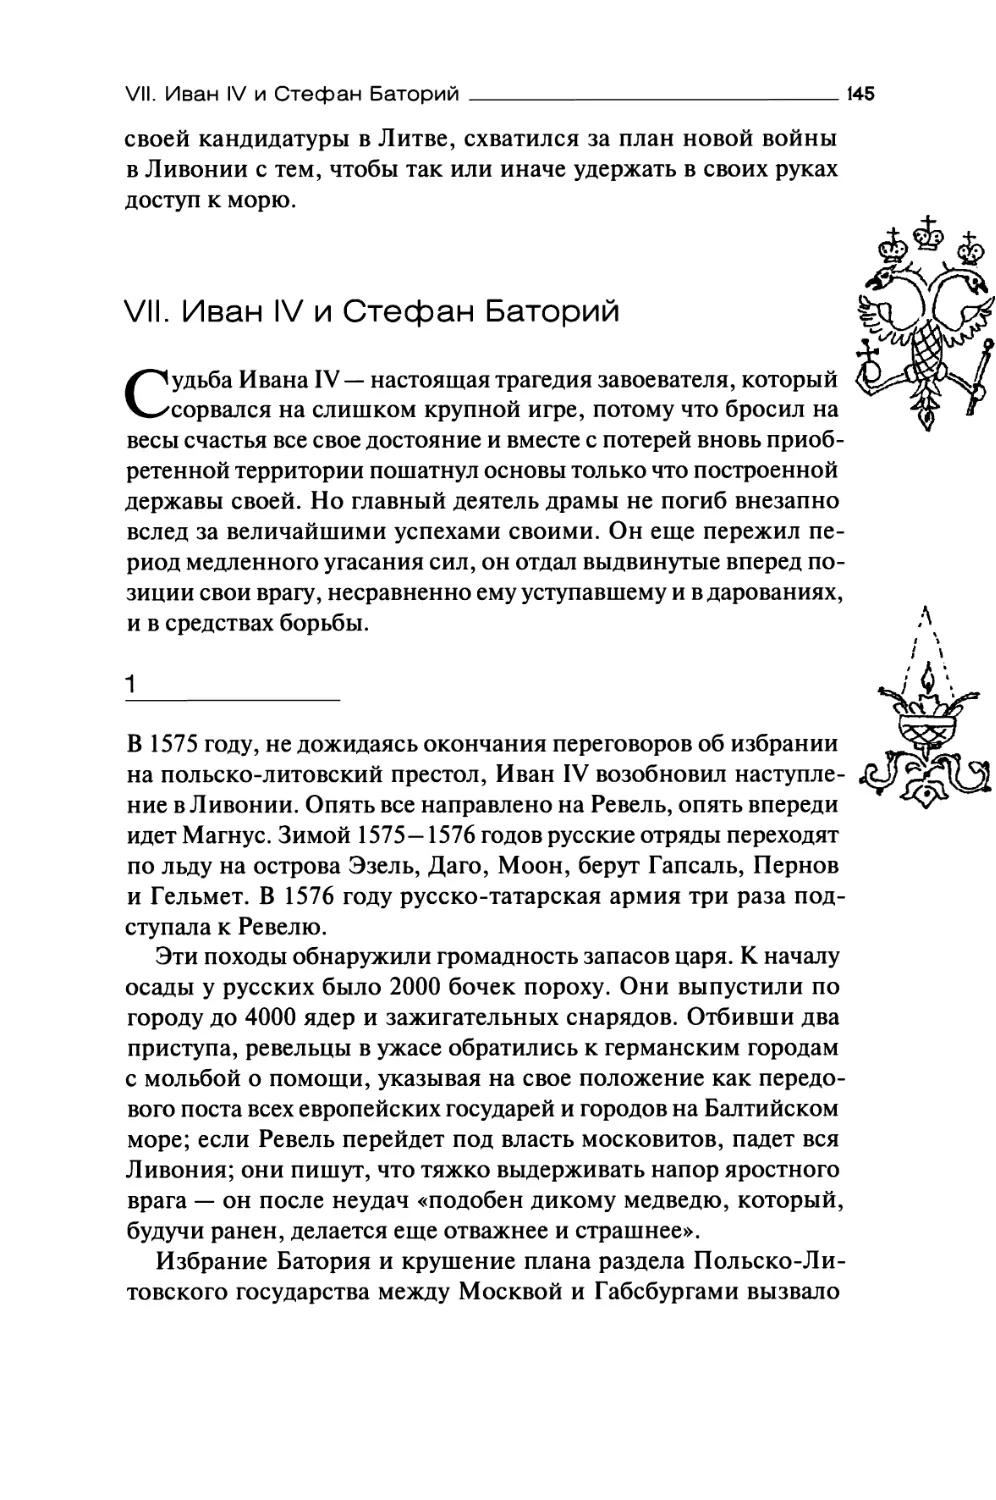 VII. Иван IV и Стефан Баторий